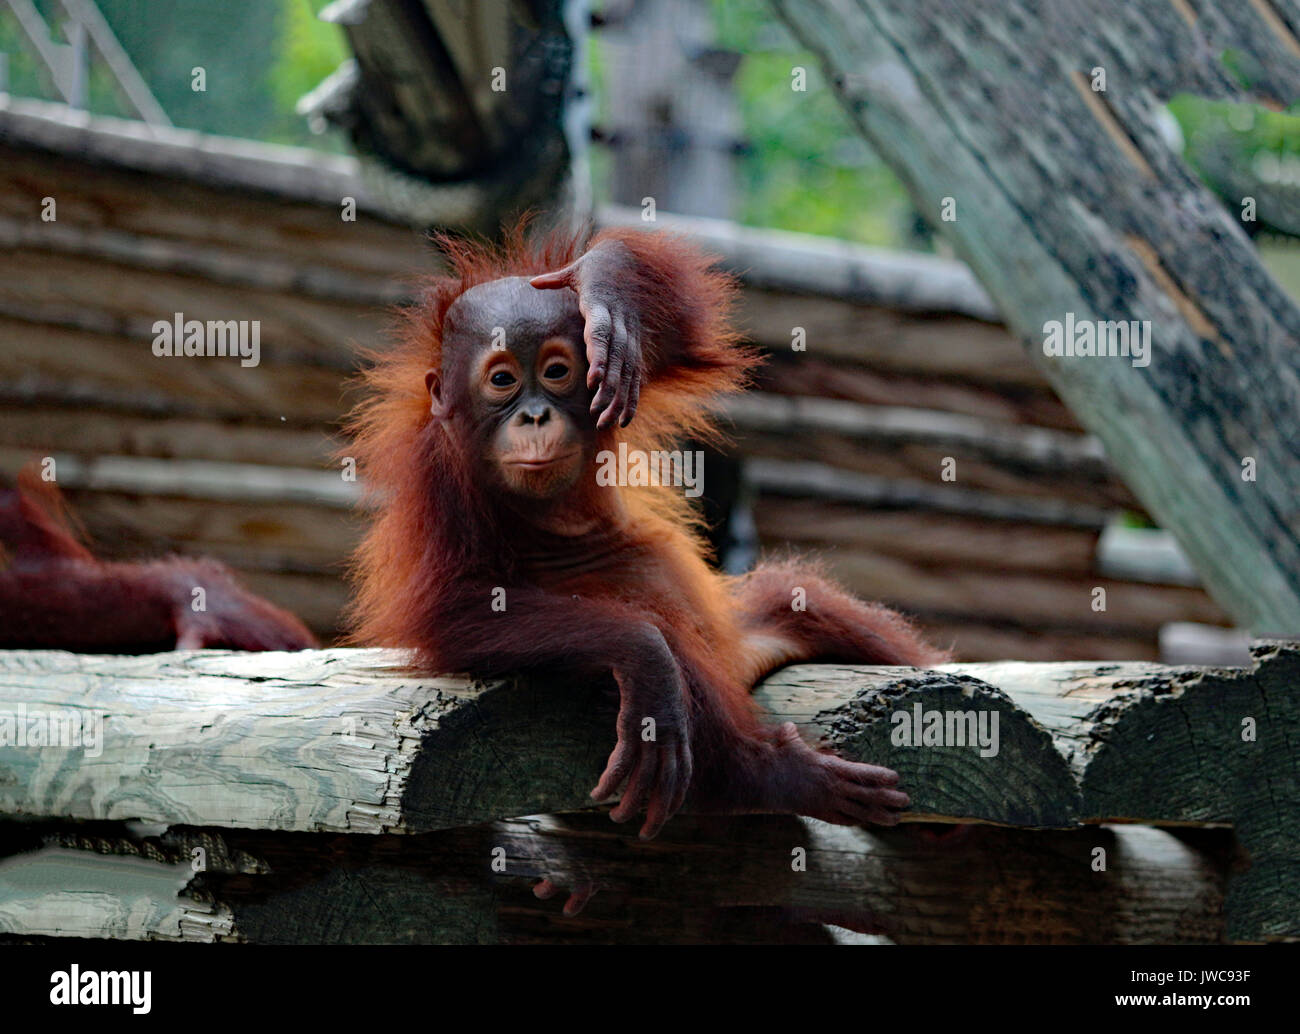 A baby Orangutan playing around on a primate platform. Stock Photo